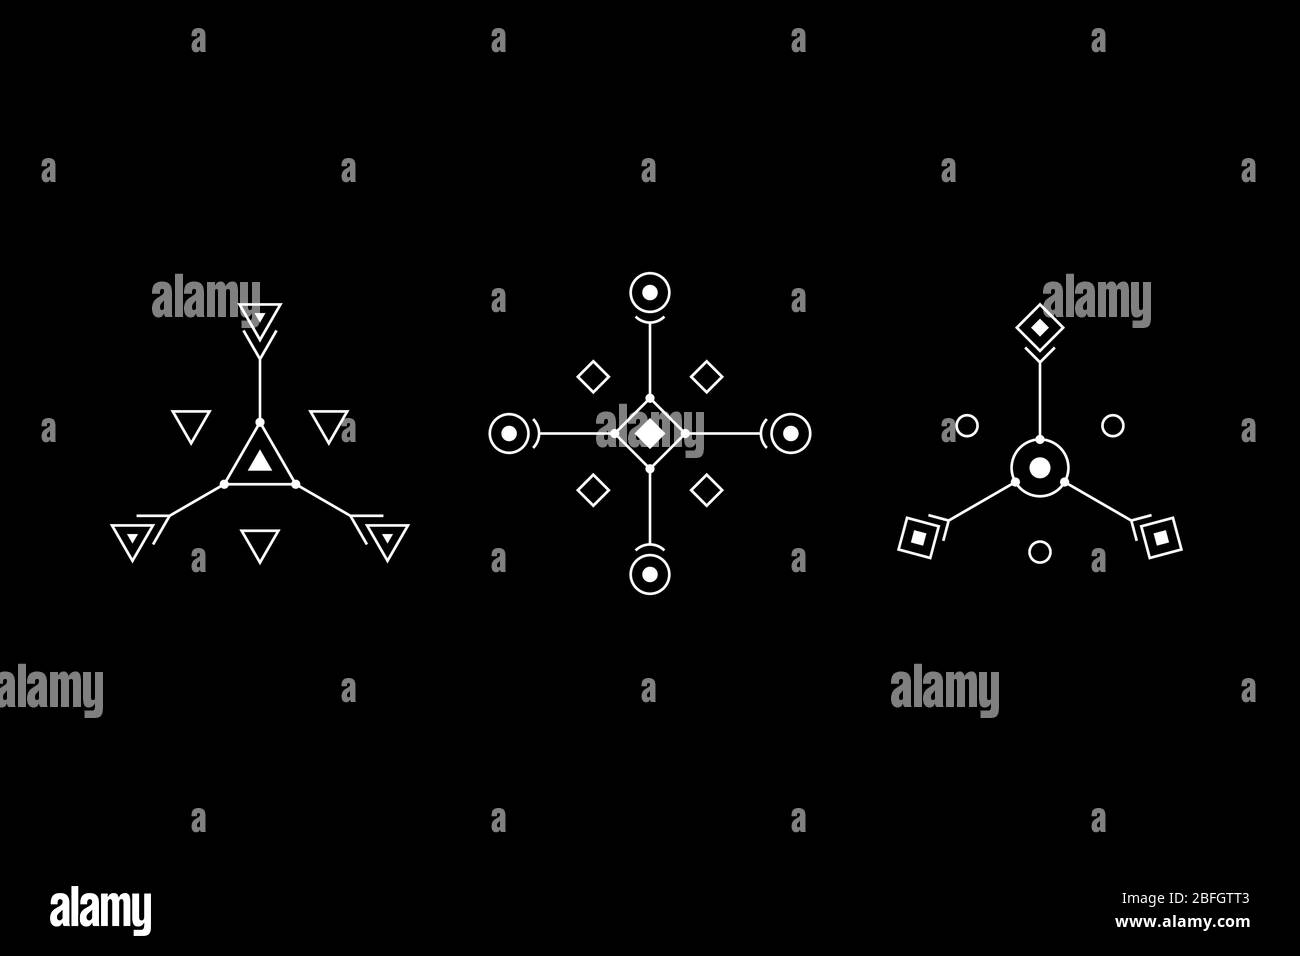 UFO oder spirituelle Geometrie weißes Symbol gesetzt. Kreis, Quadrat, Rauten Figuren. Design-Symbole für Puzzle, Logik, metroidvania Spiele. Vektorgrafik. Stock Vektor